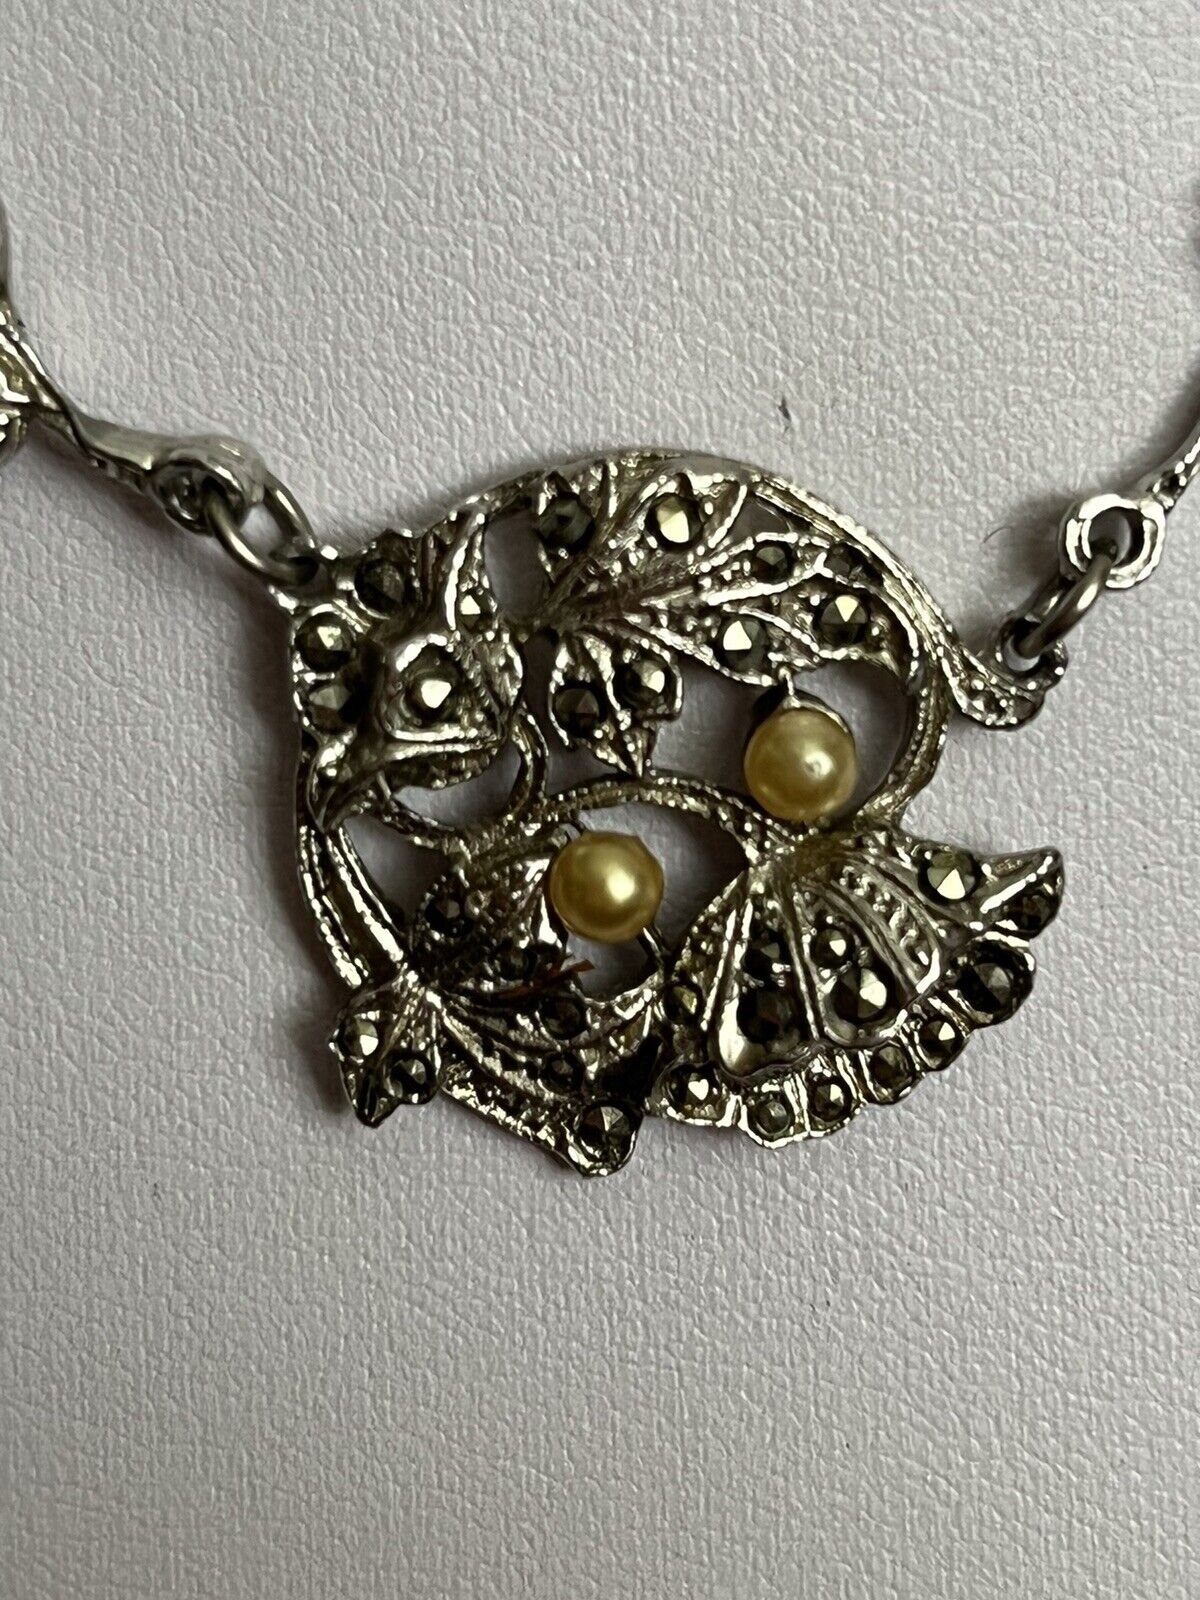 Vintage Marcasite Faux Pearl Flowers Necklace